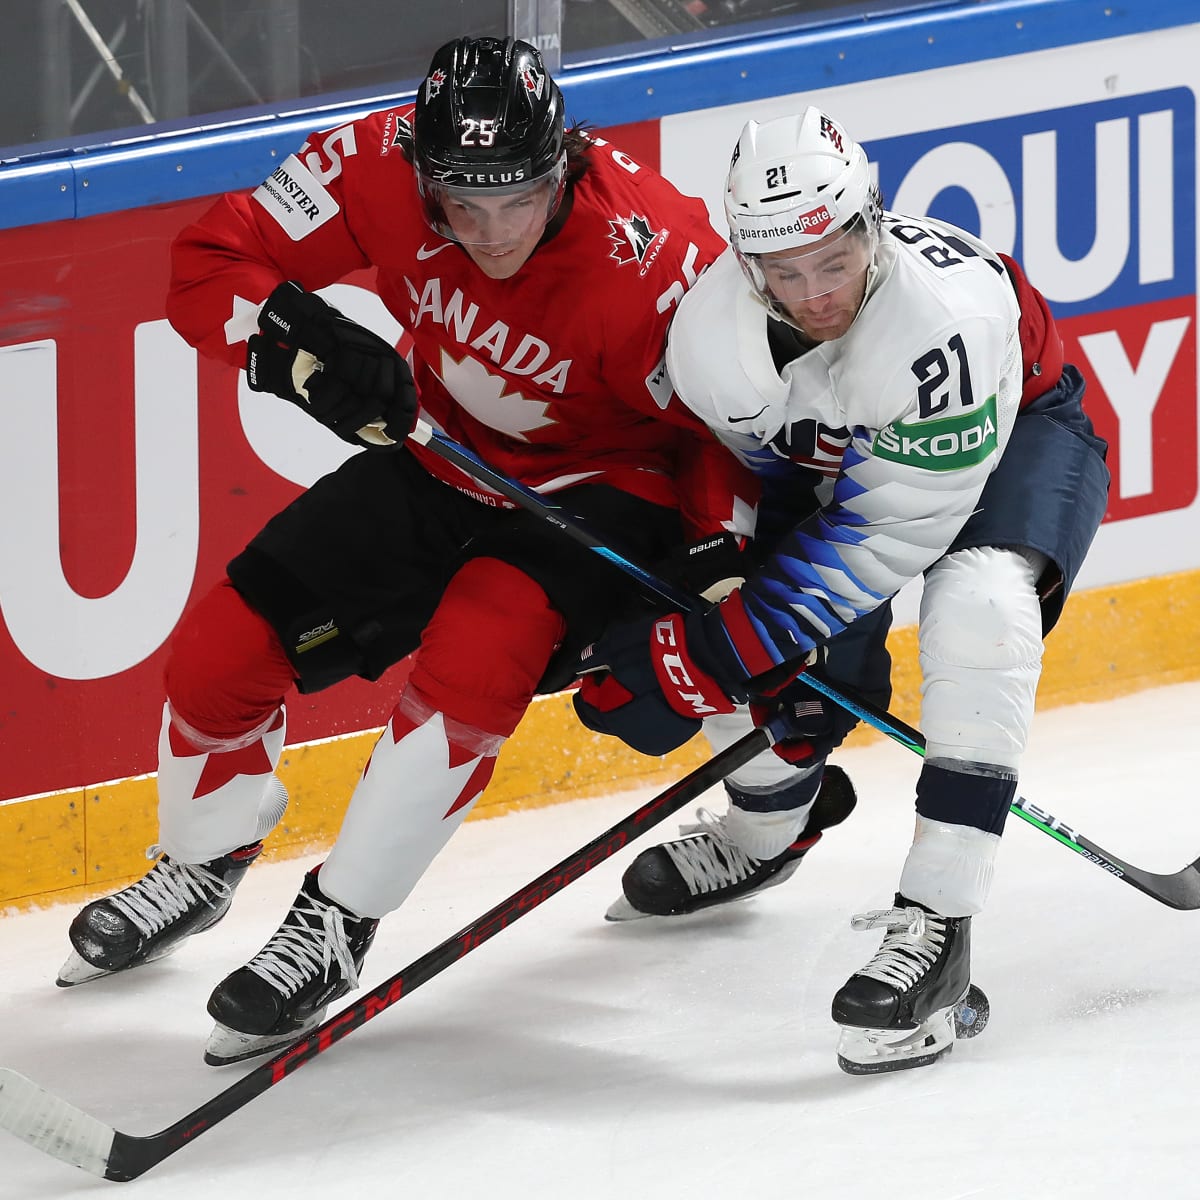 Owen Power has hat trick, Canada wins world junior opener - NBC Sports